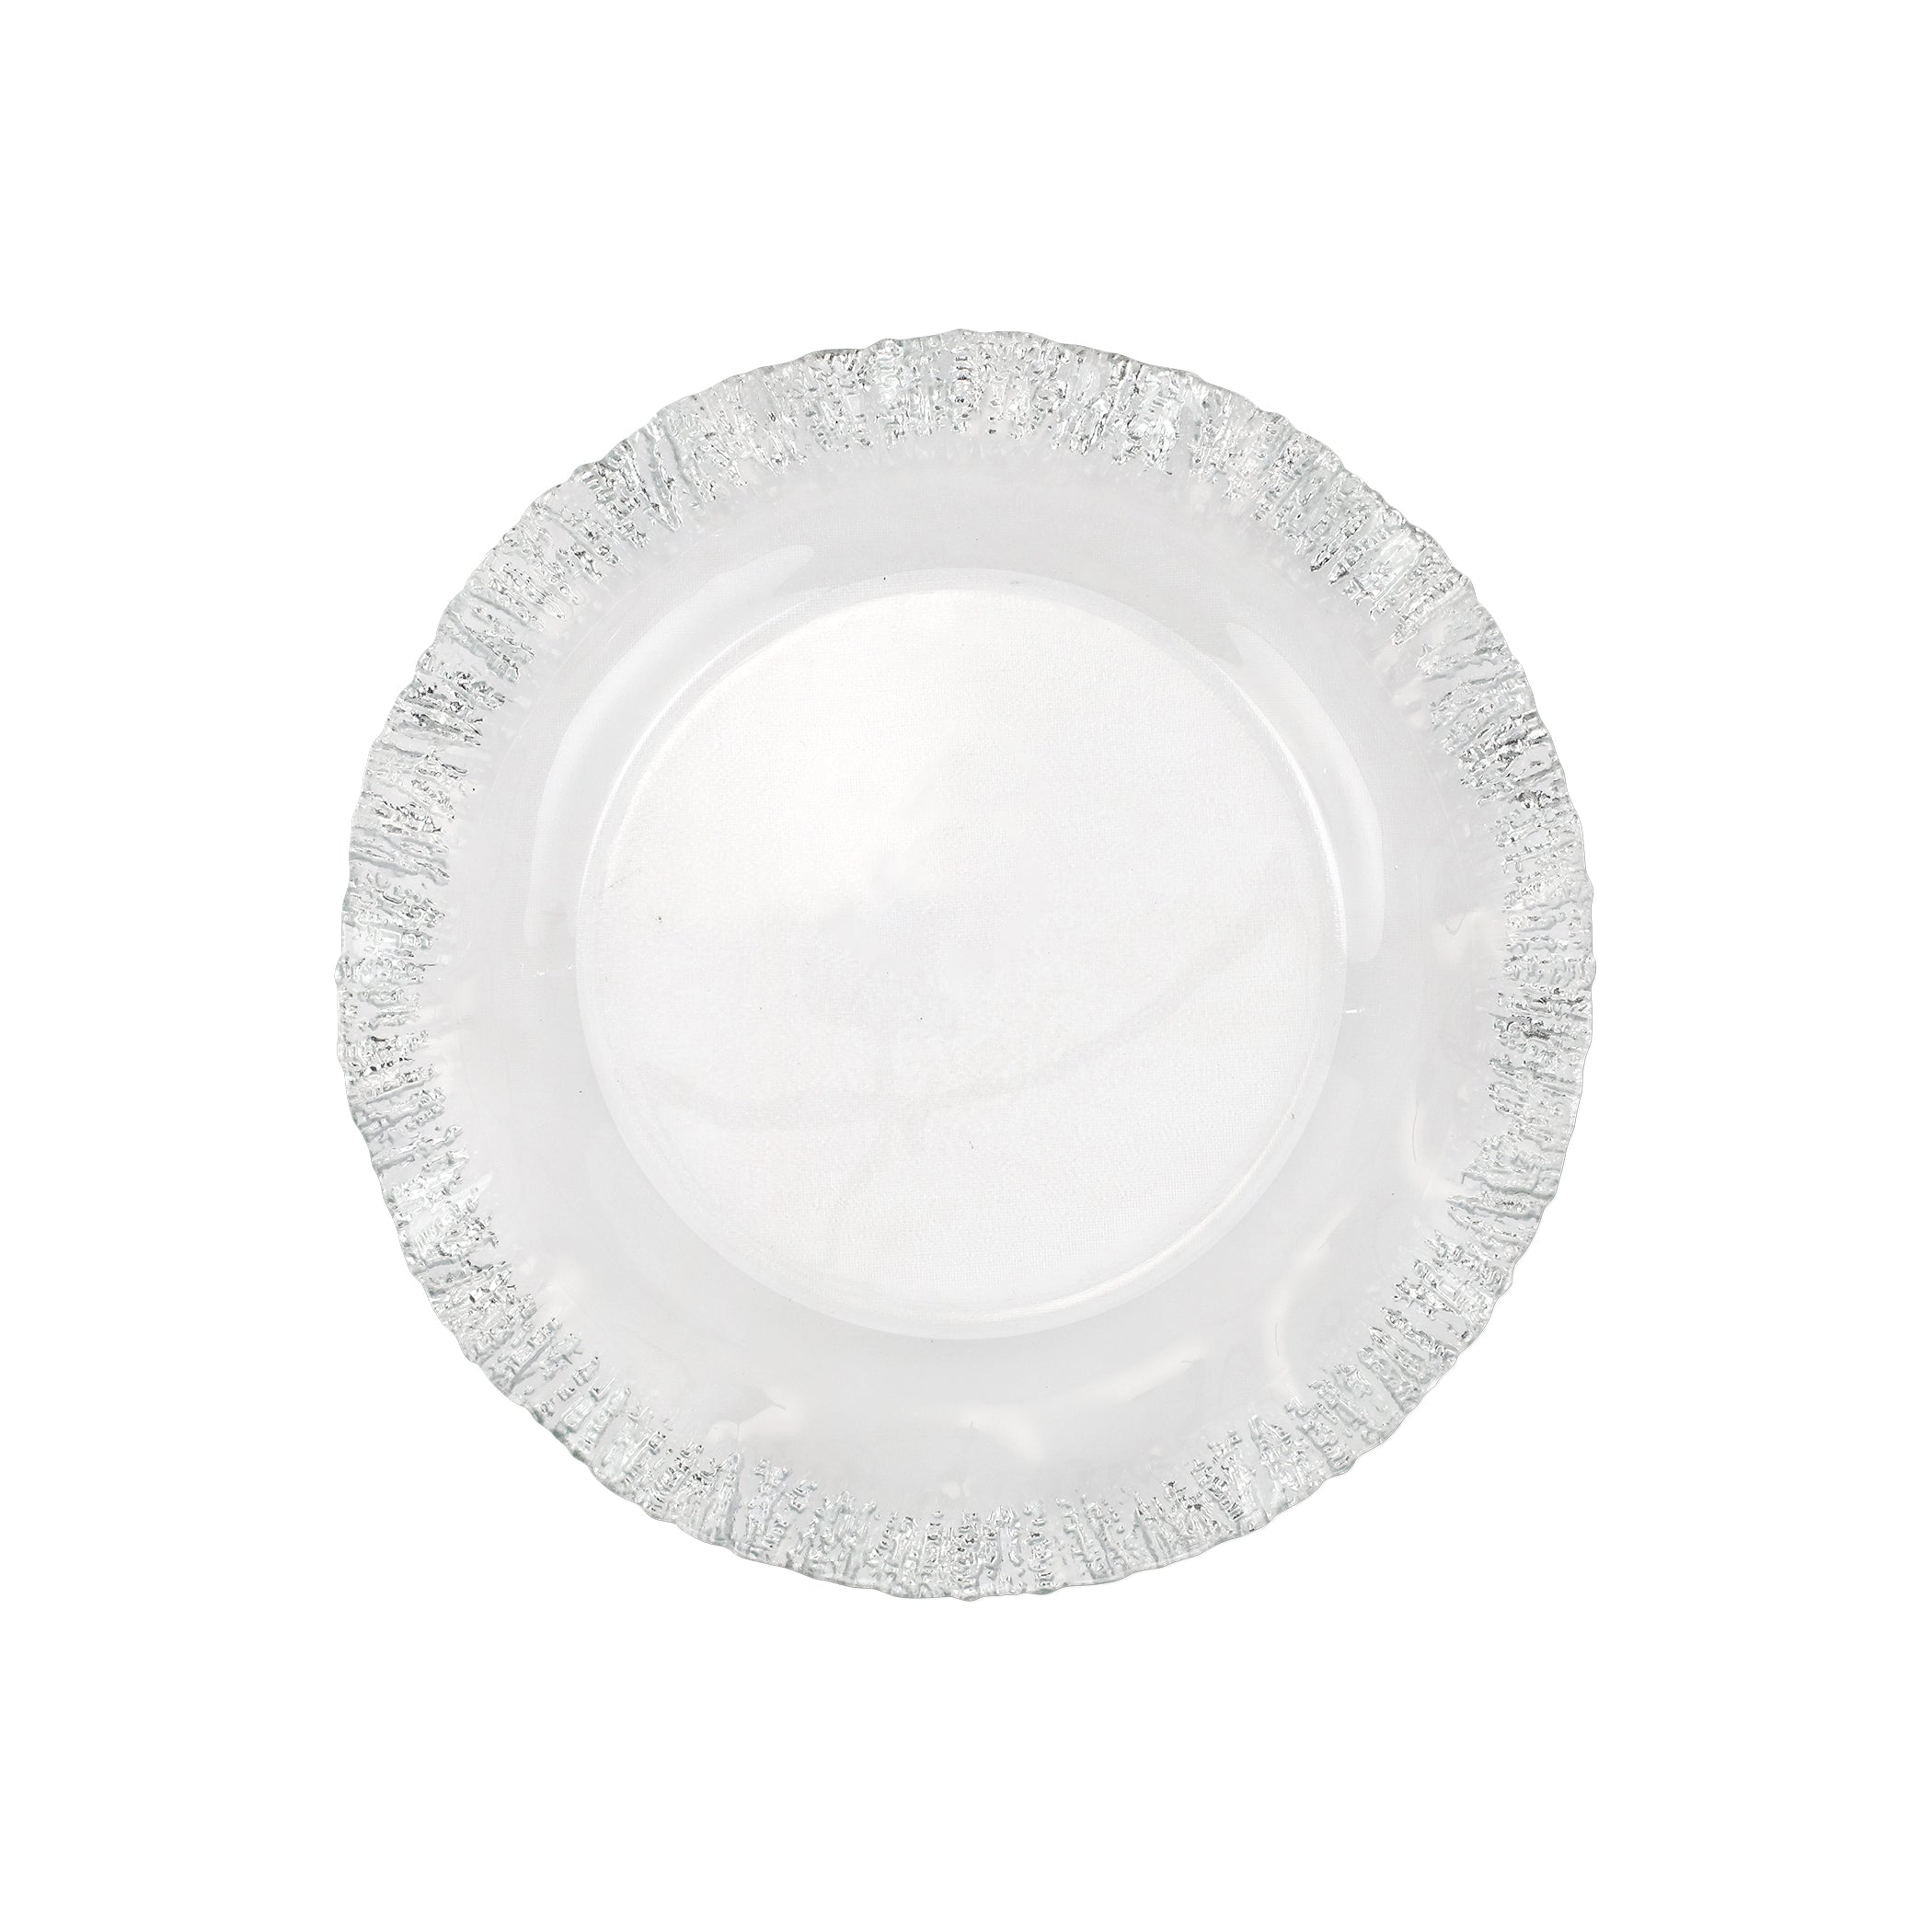 Rufolo Glass Platinum Service Plate/Charger